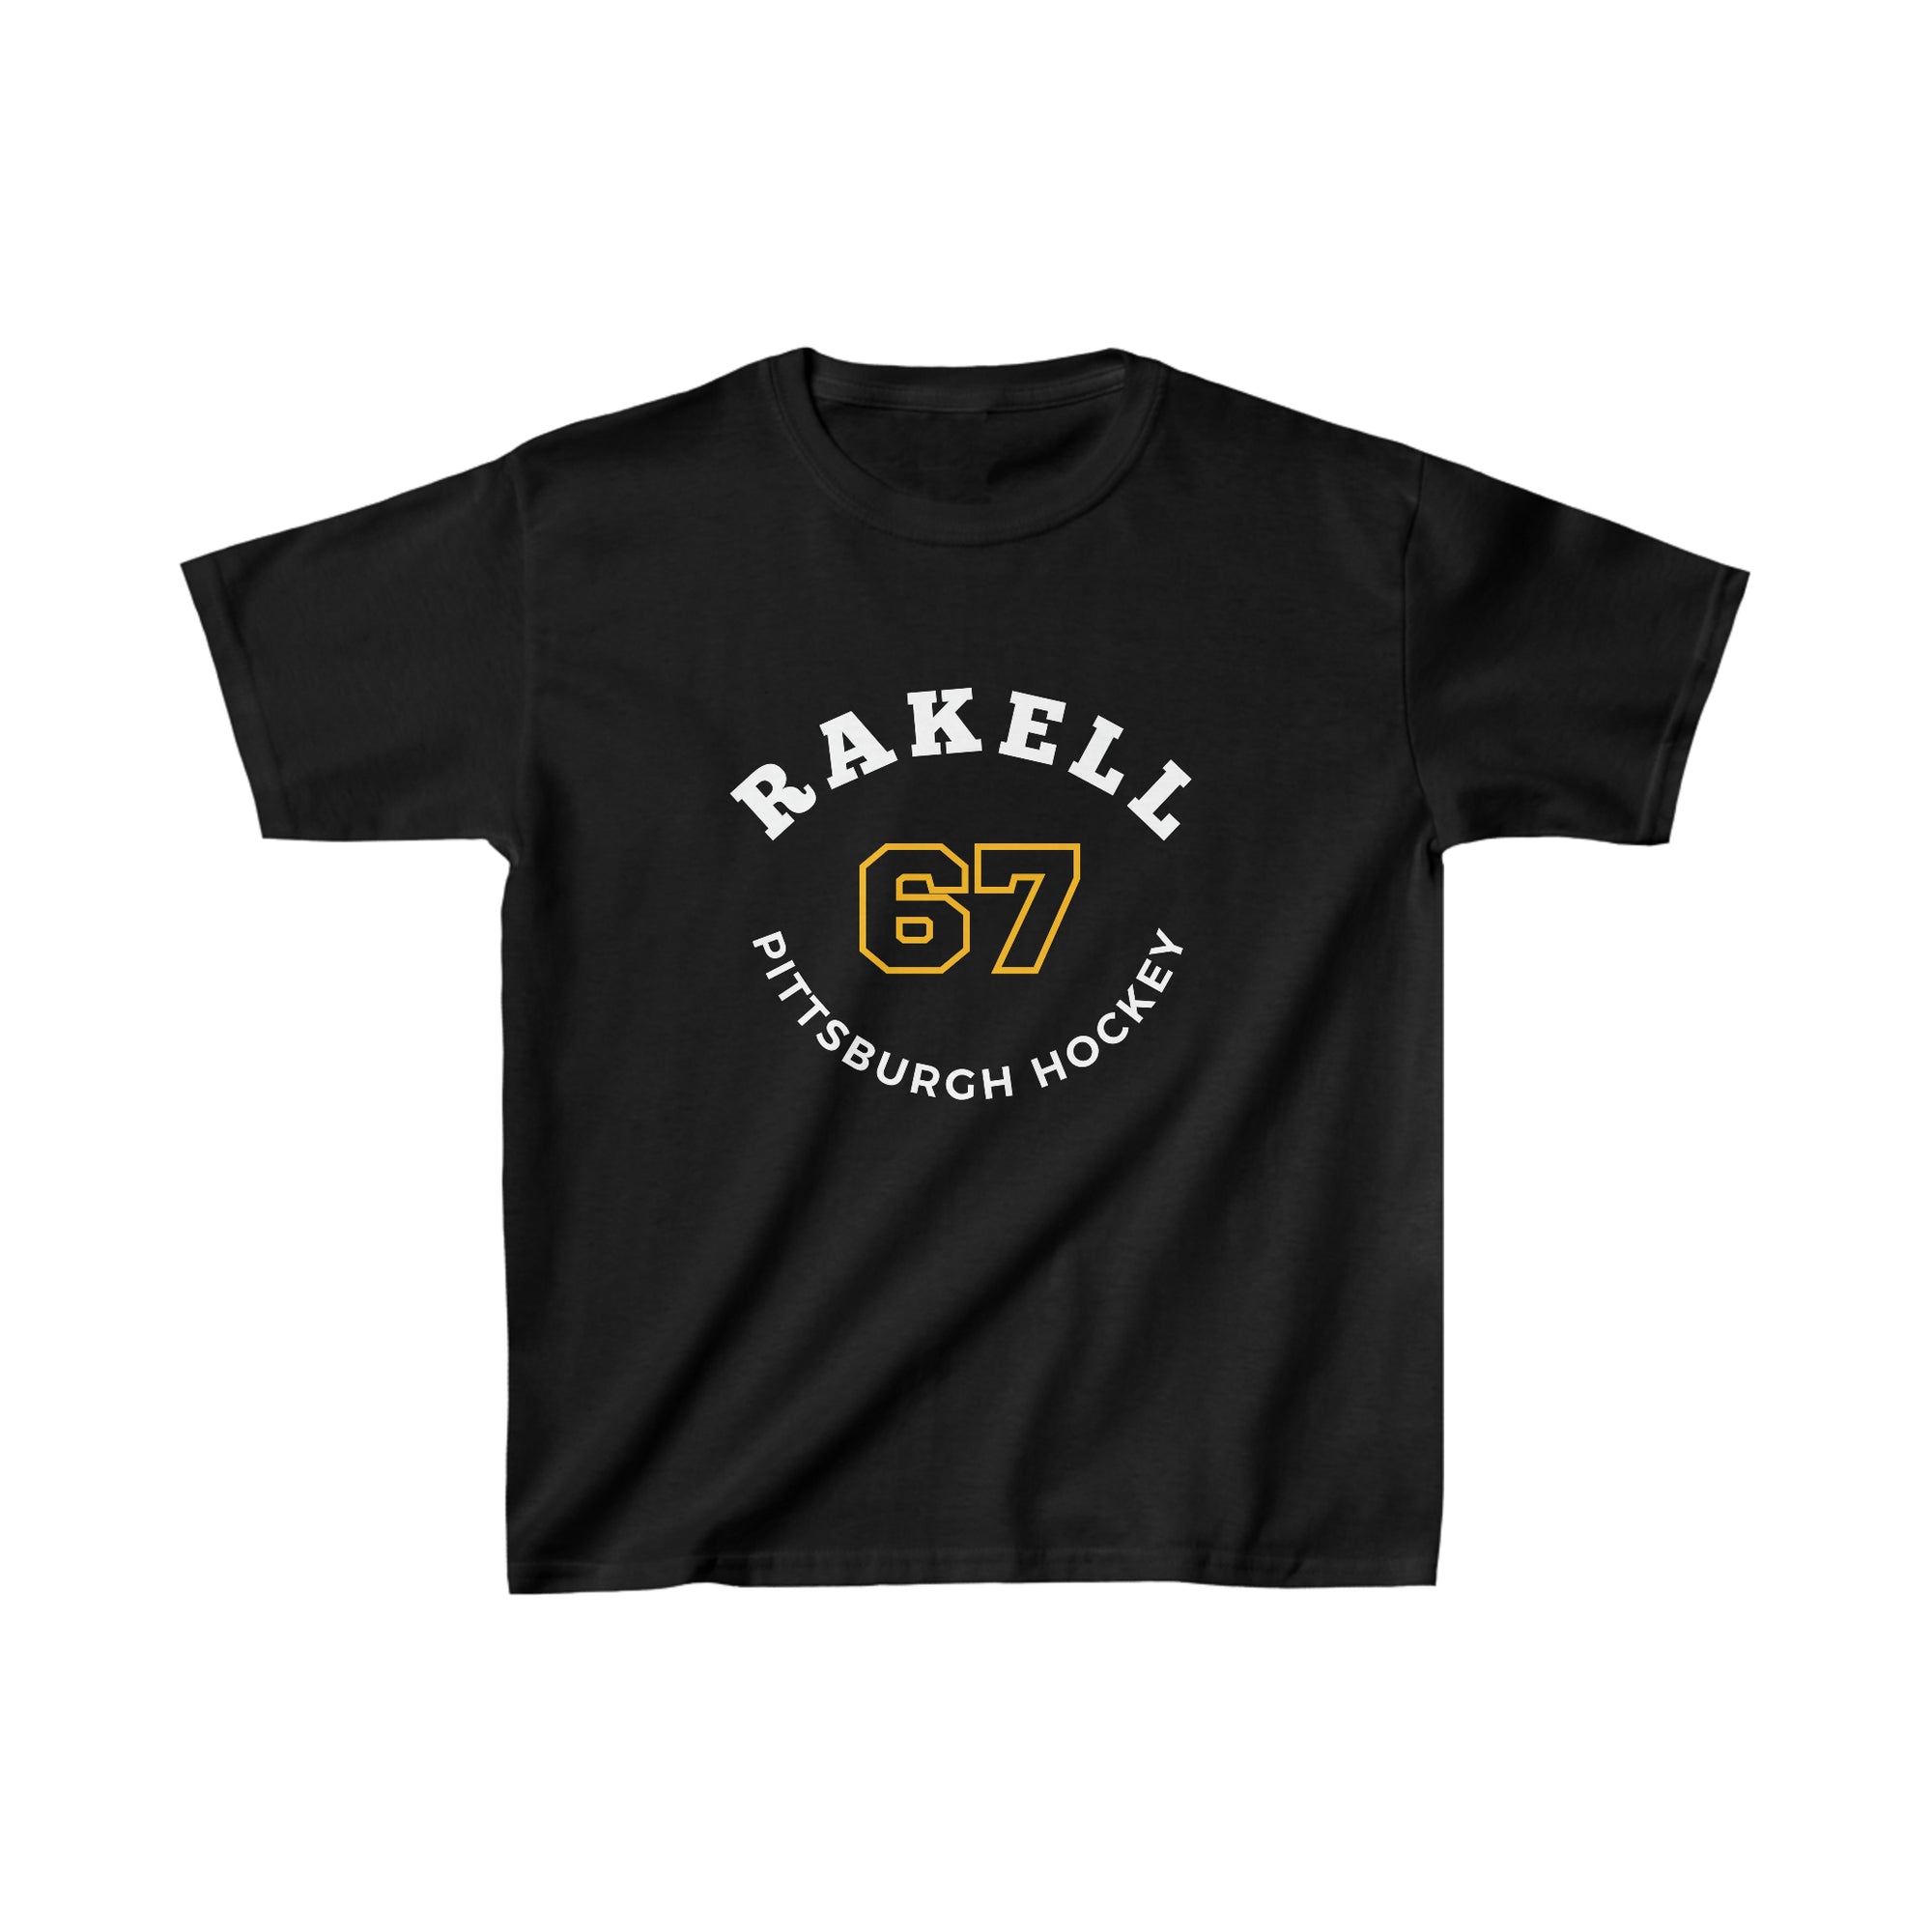 Rakell 67 Pittsburgh Hockey Number Arch Design Kids Tee